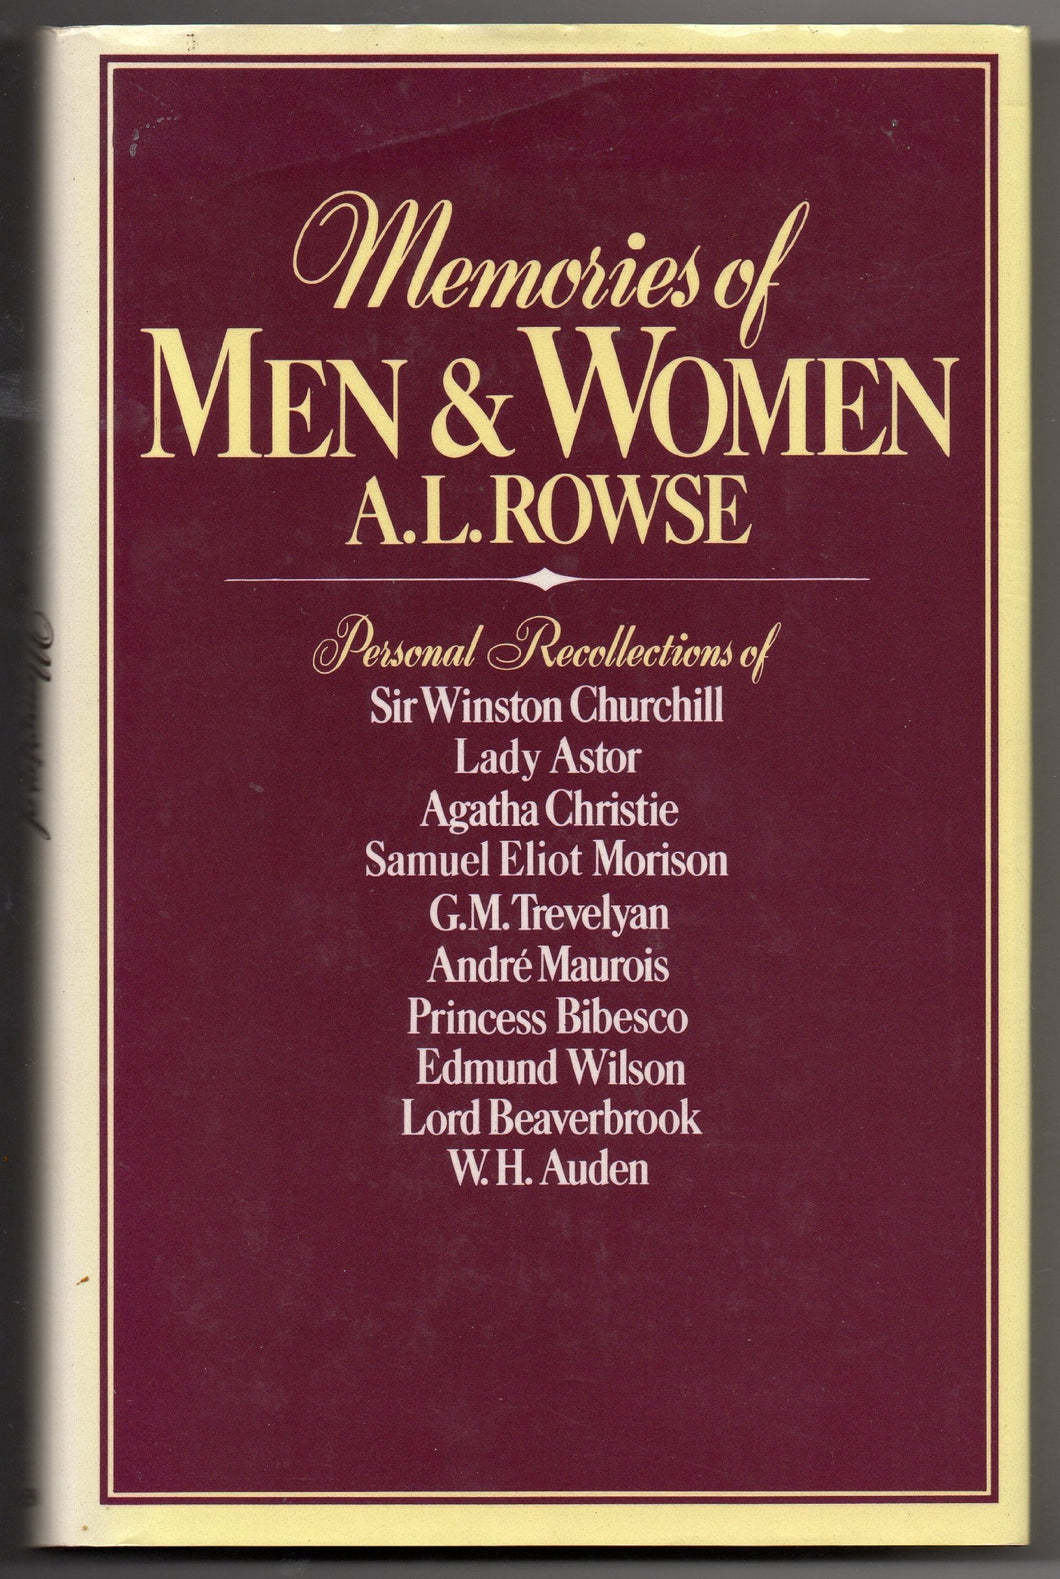 Memories of Men and Women Rowe, Dr. Alfred Lestie